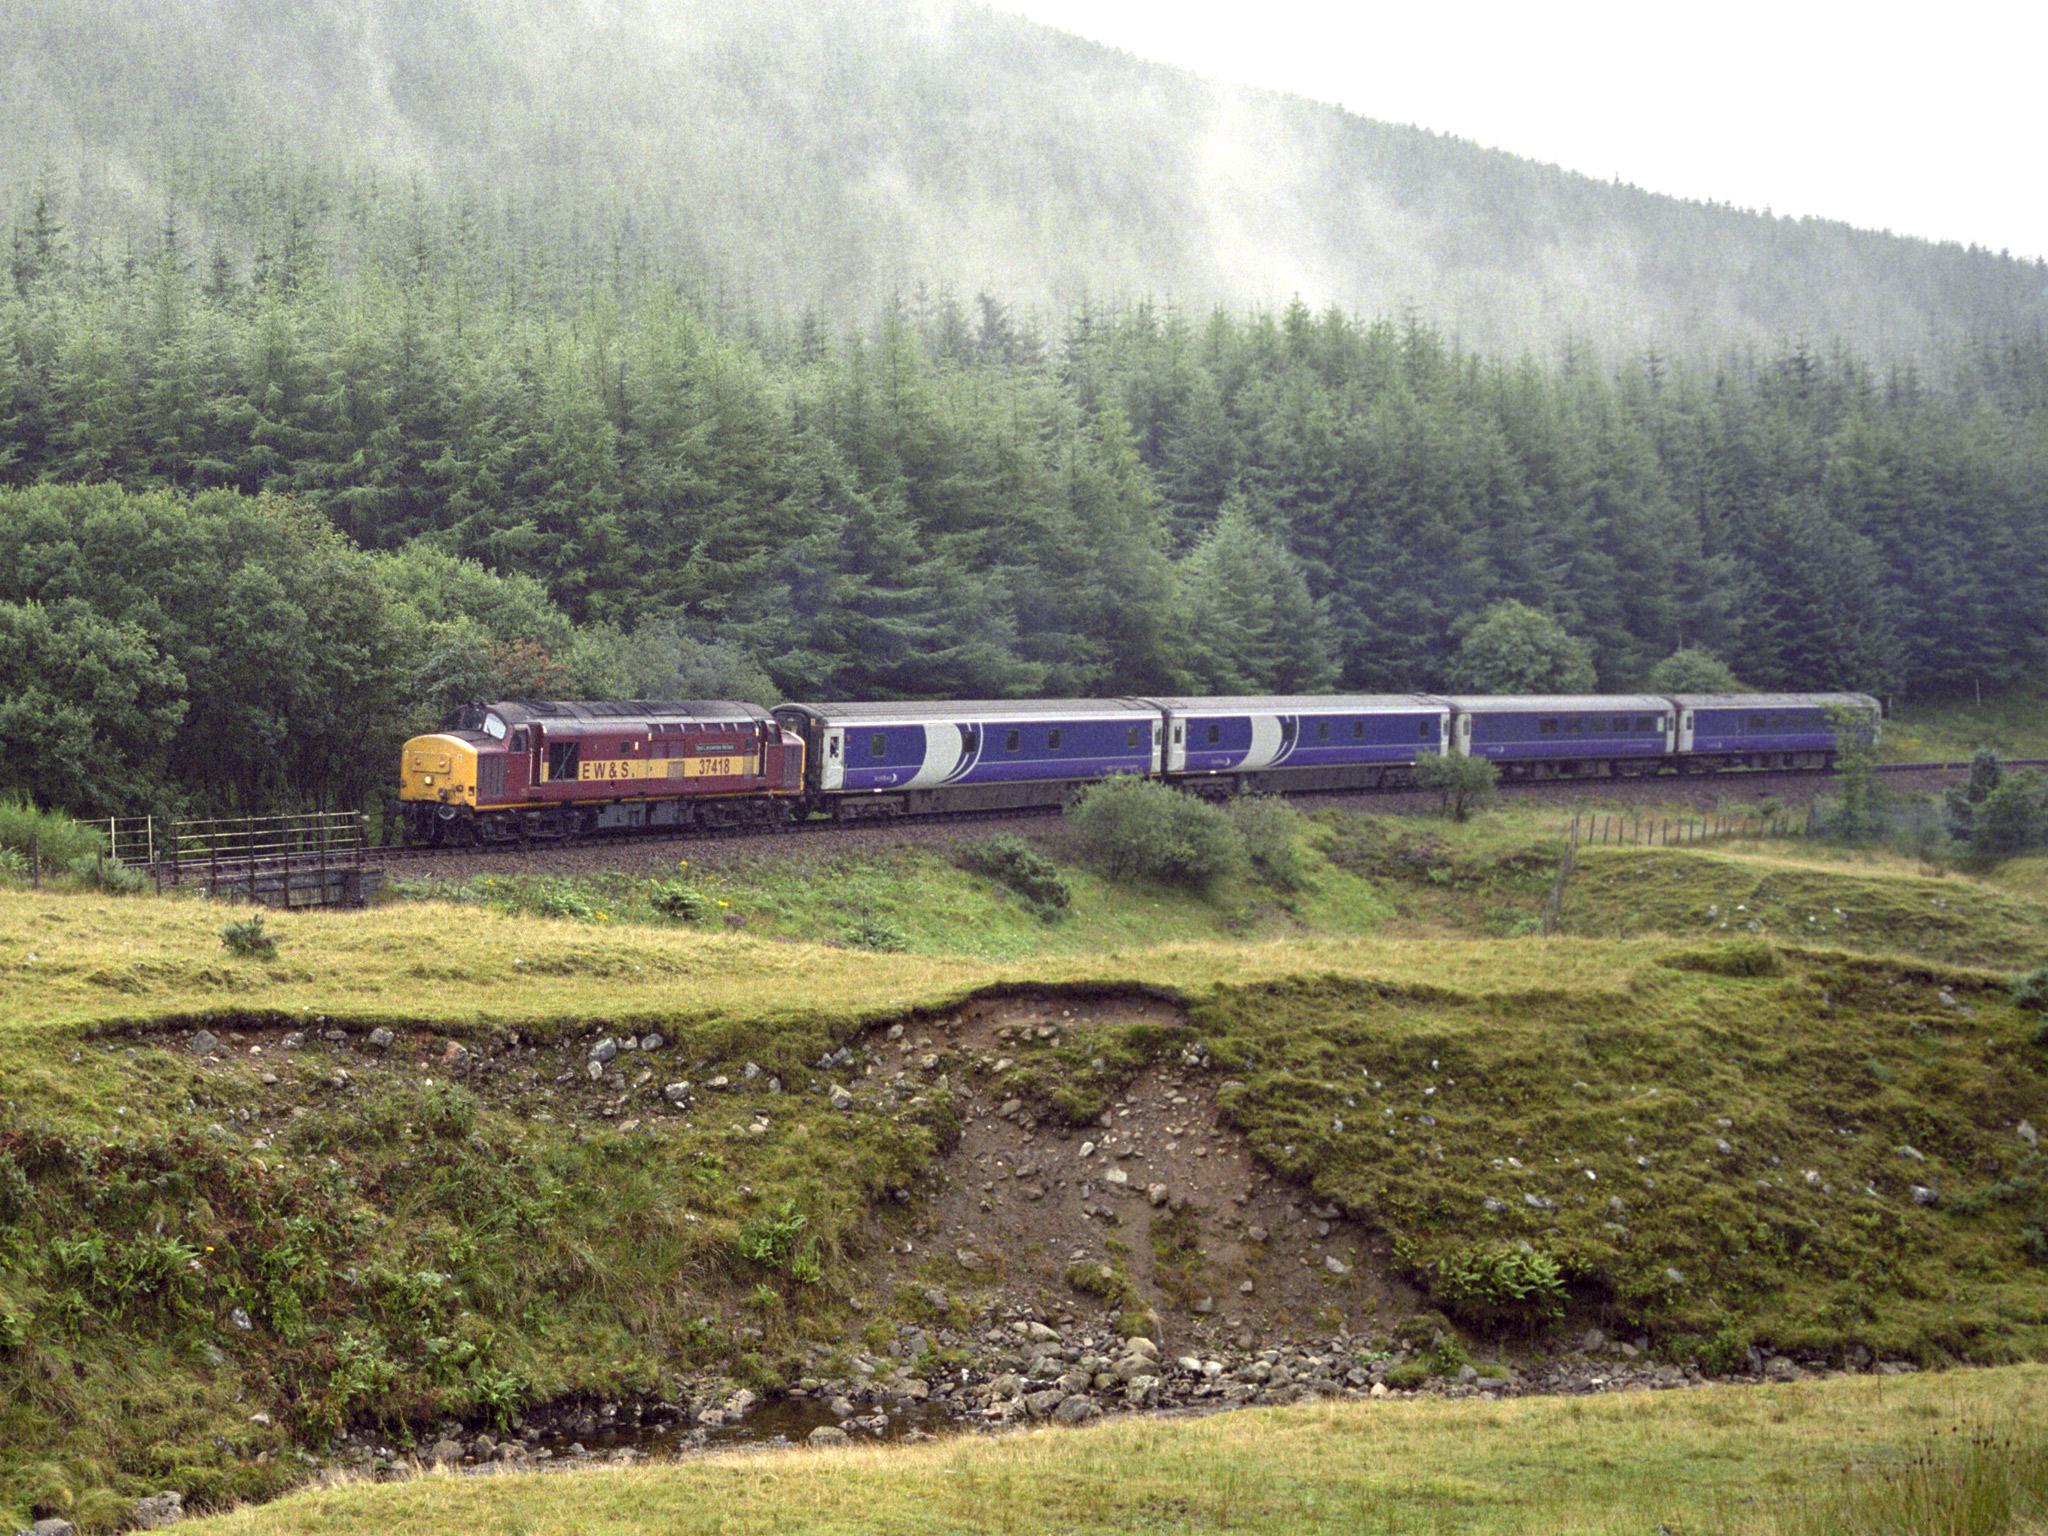 Caledonian Sleeper from London Euston Station approaching the Horseshoe Curve on the West Highland Line